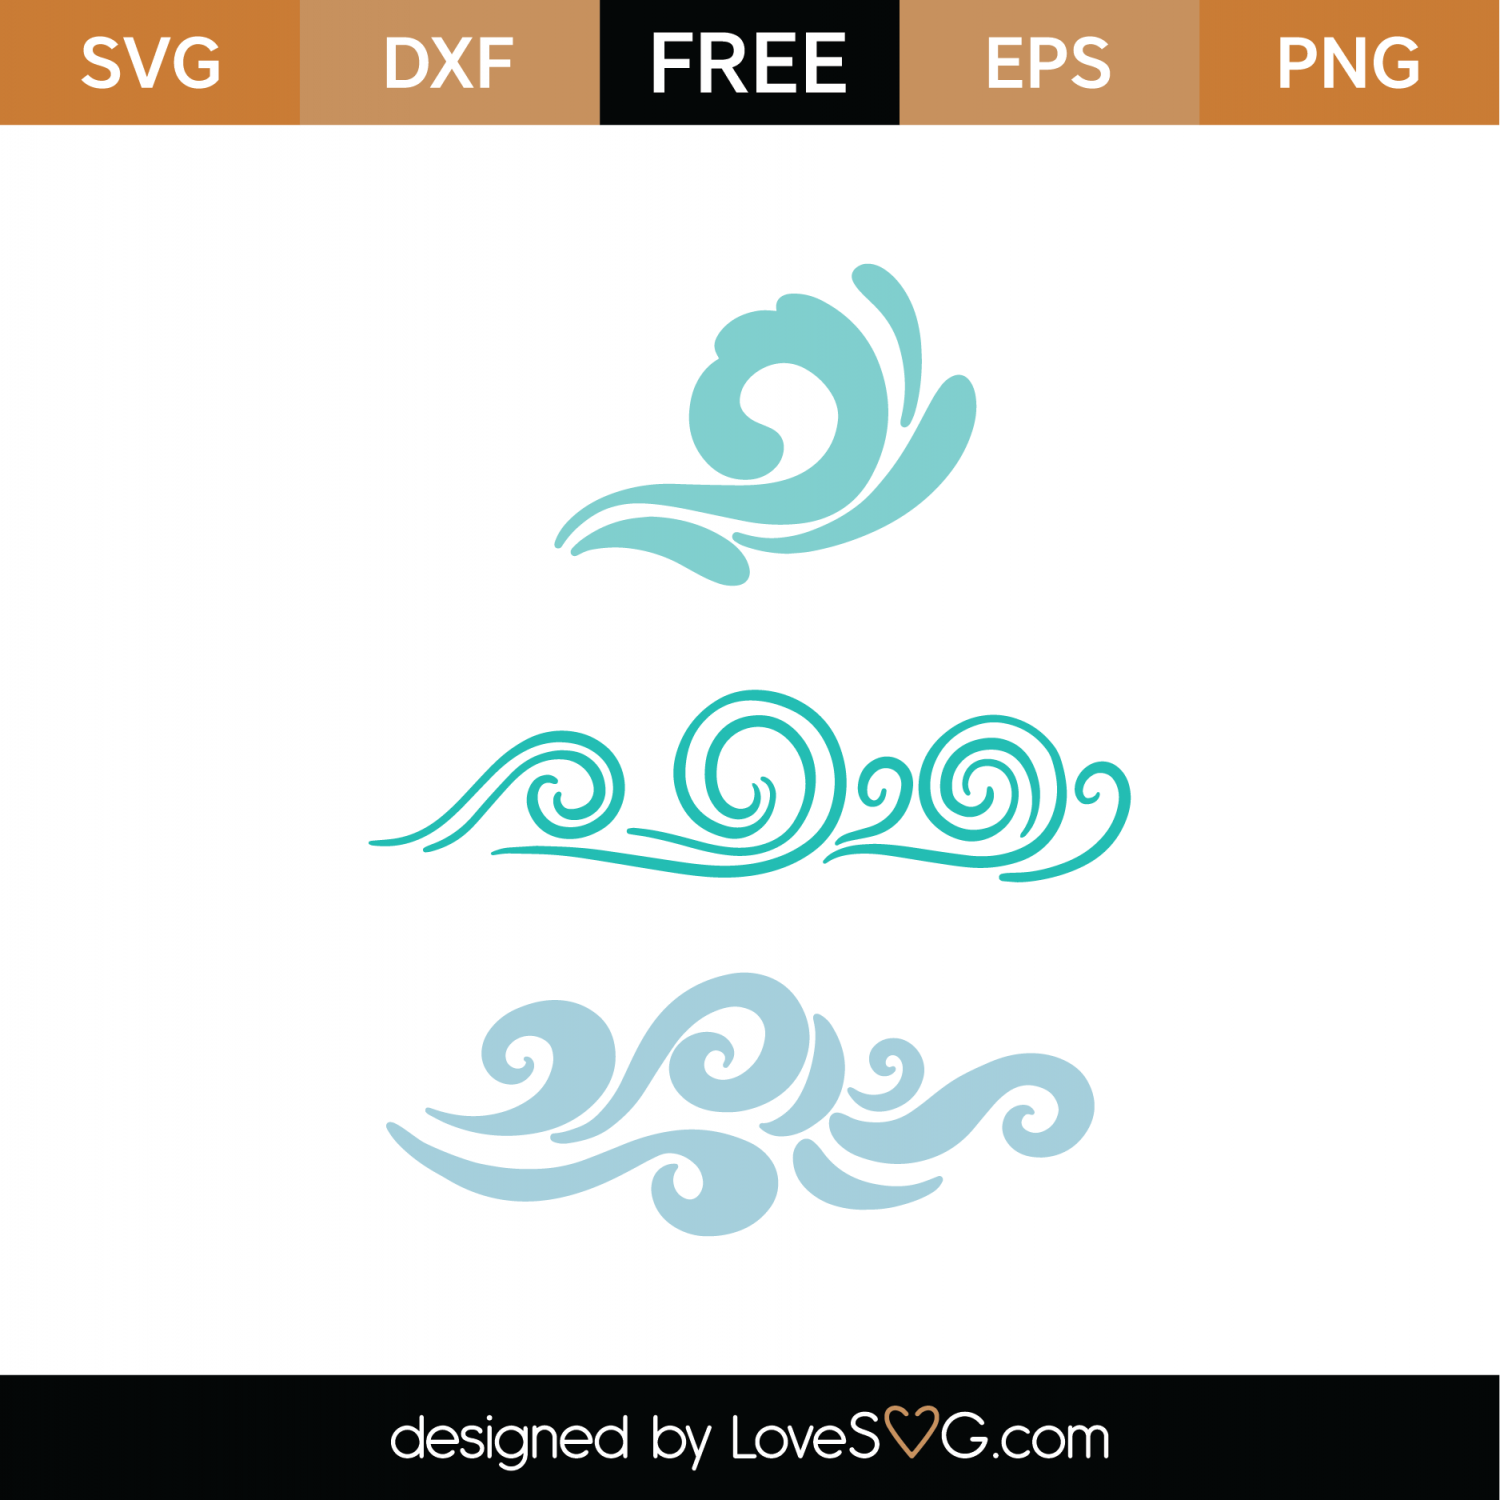 Download Free Decorative Waves SVG Cut File | Lovesvg.com